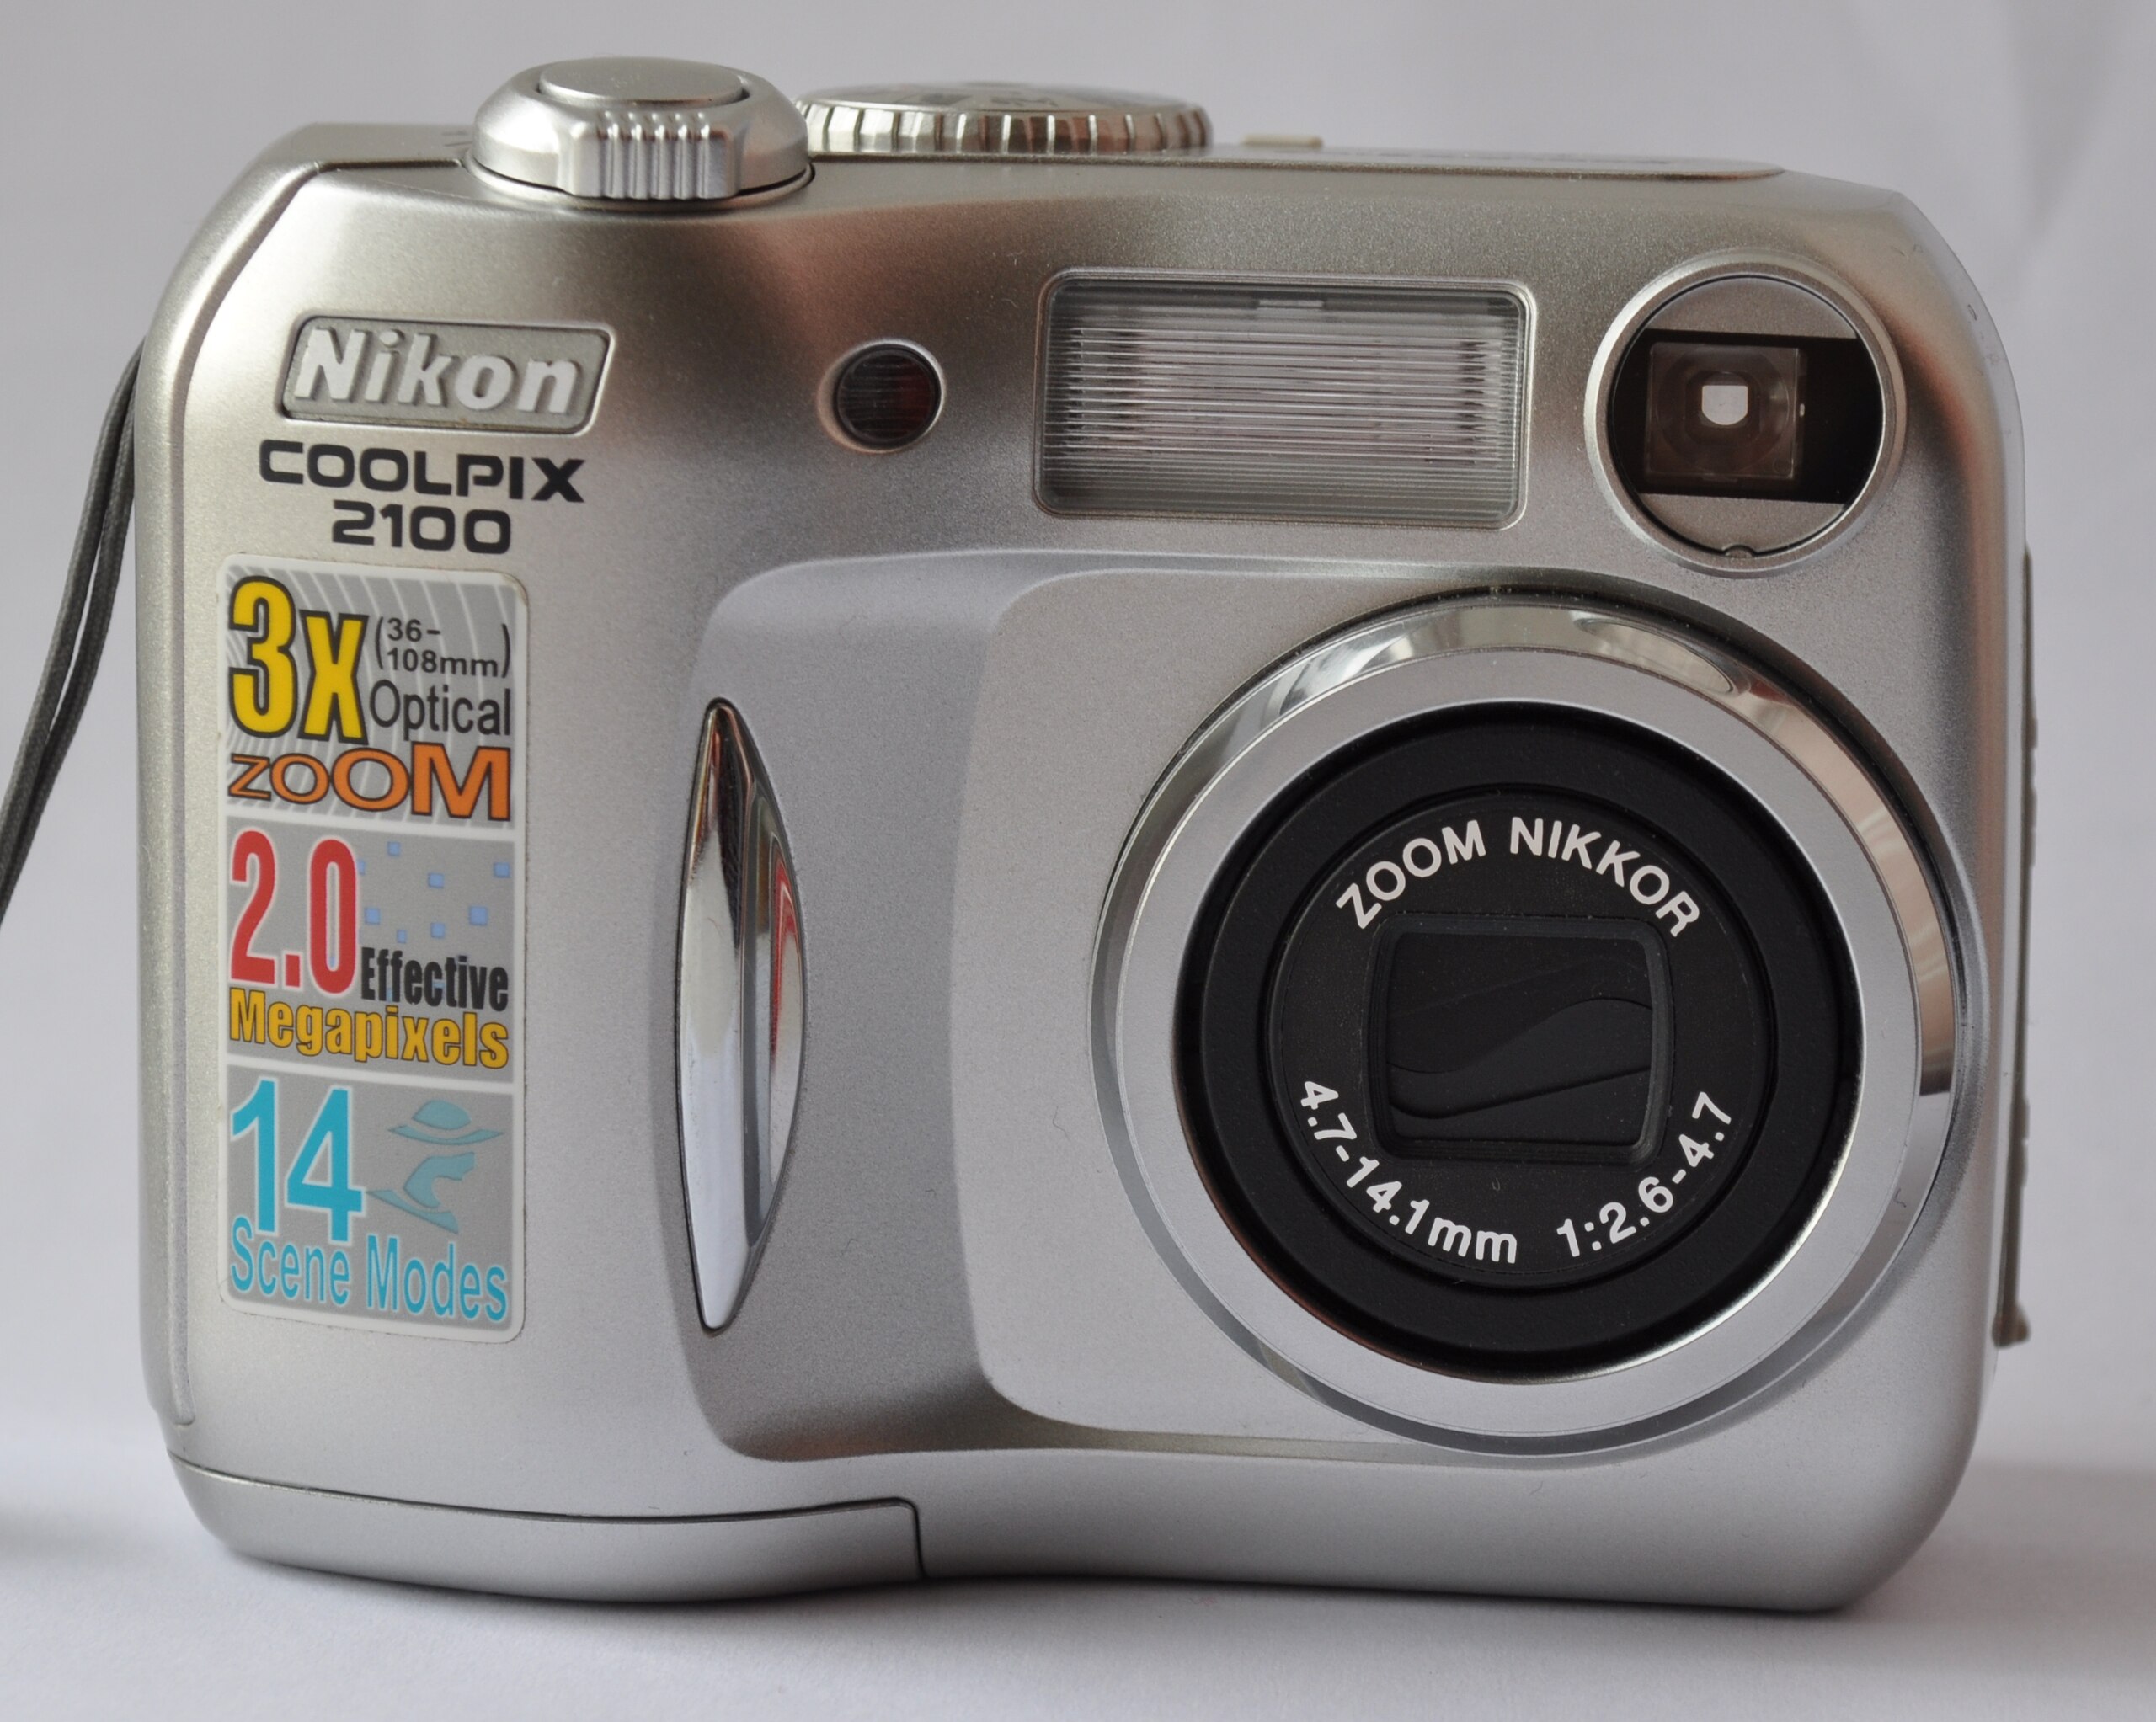 File:Nikon Coolpix 2100,1.jpg - Wikipedia